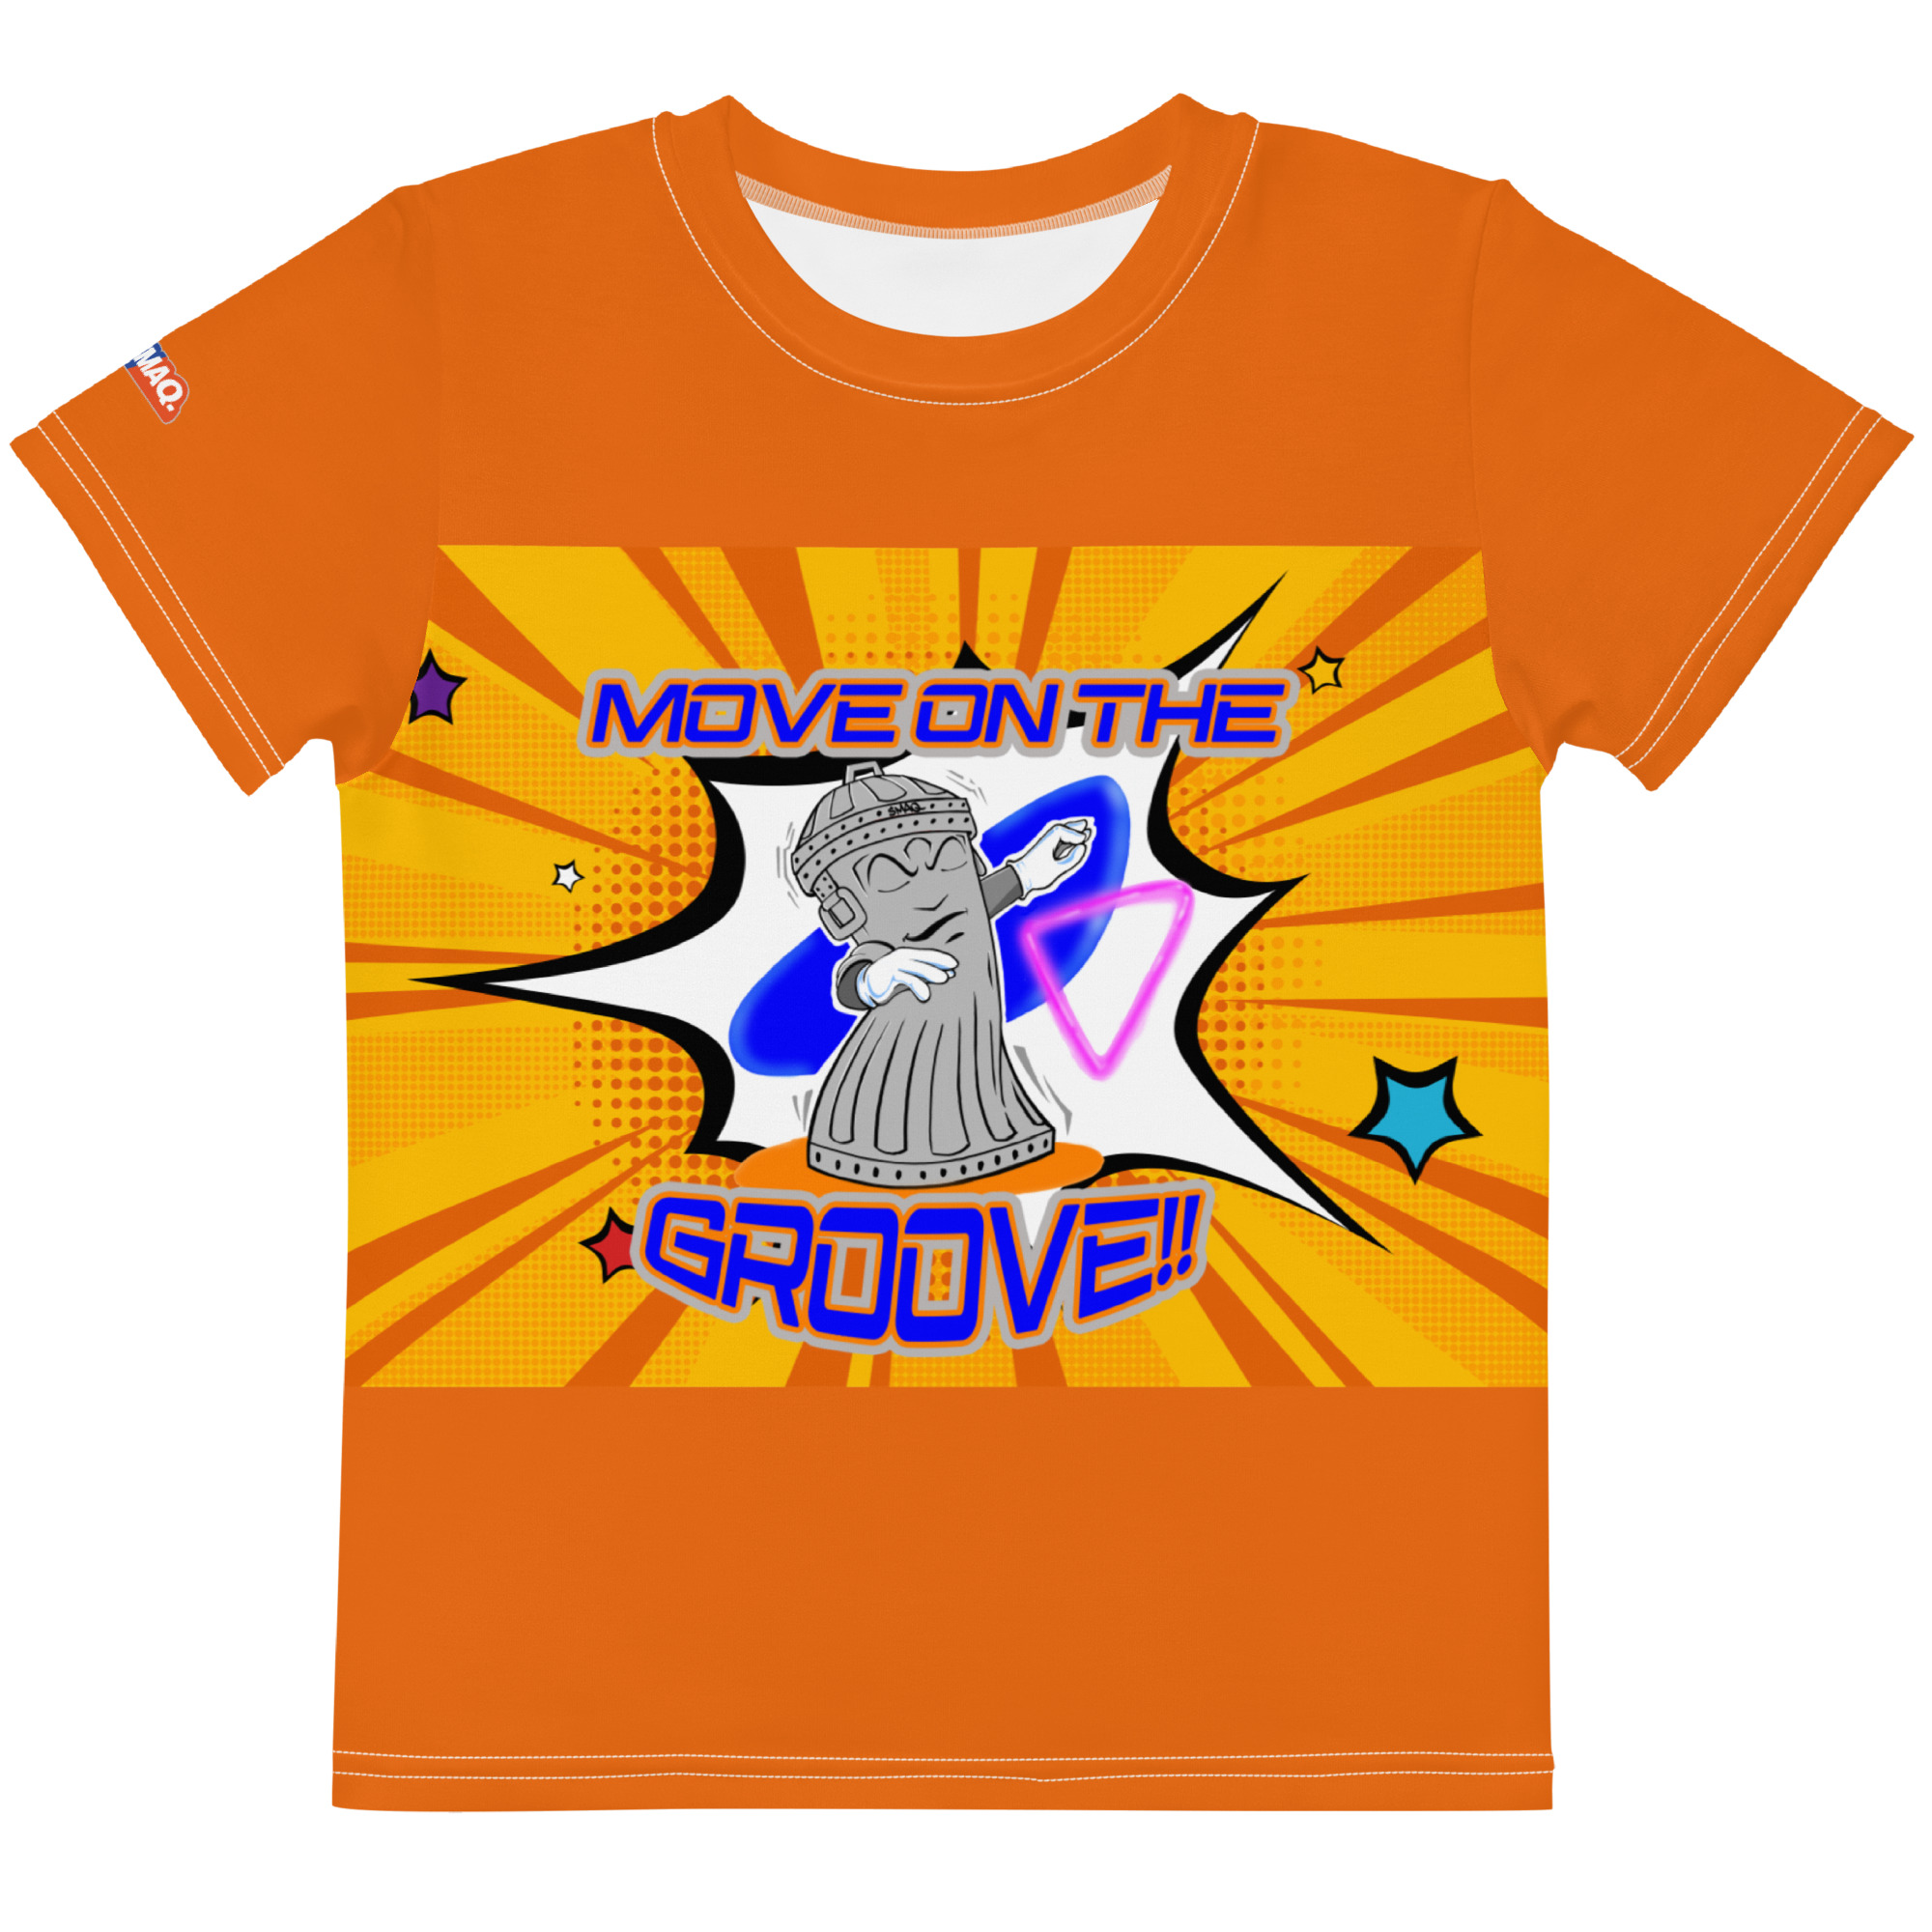 SMAQ Orange Burst Groovin Kids crew neck t-shirt